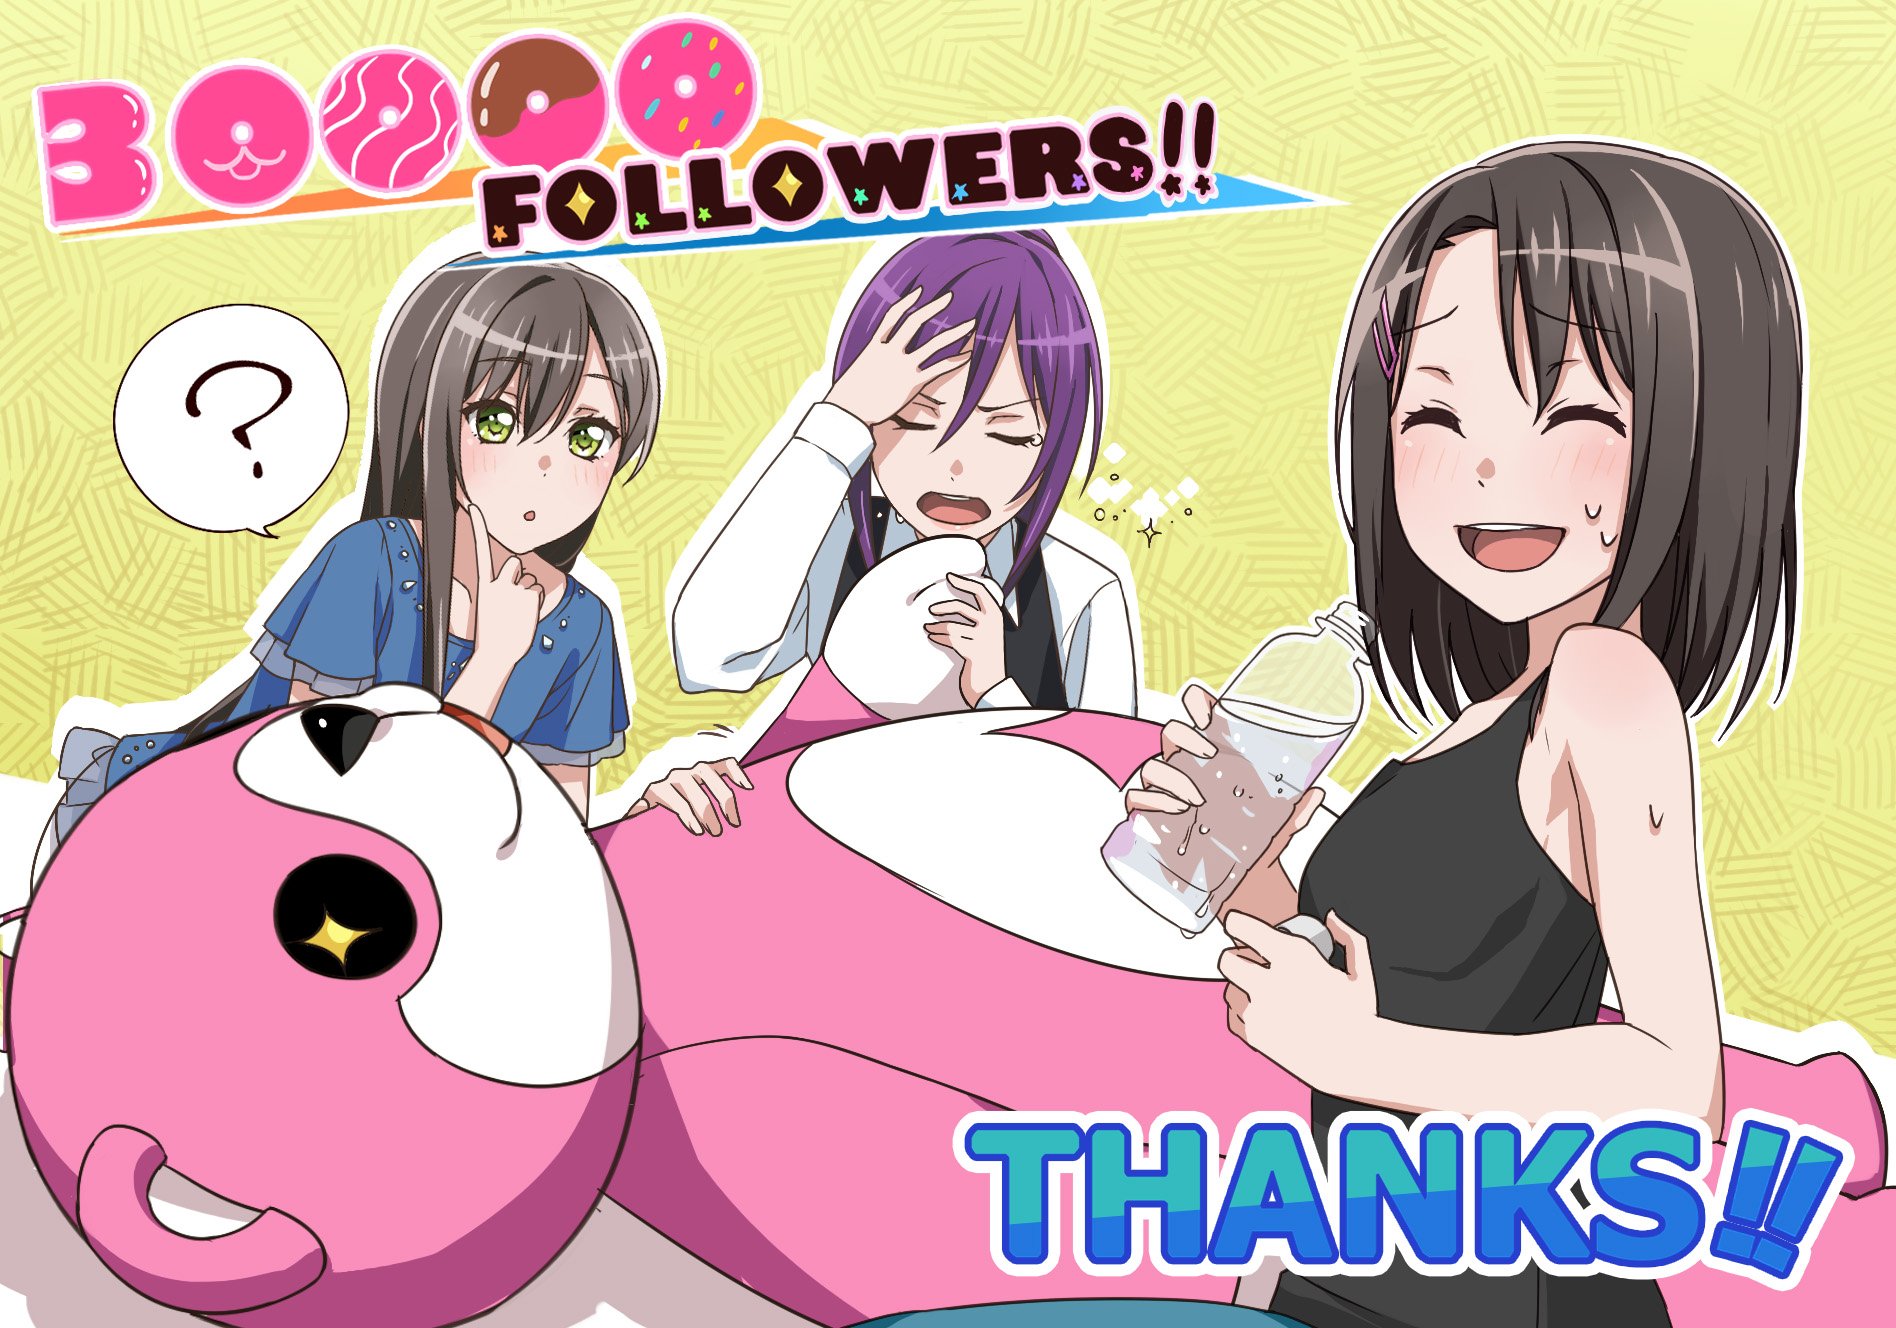 300,000 Twitter Followers / 30,000 Followers - Tae, Kaoru, Misaki